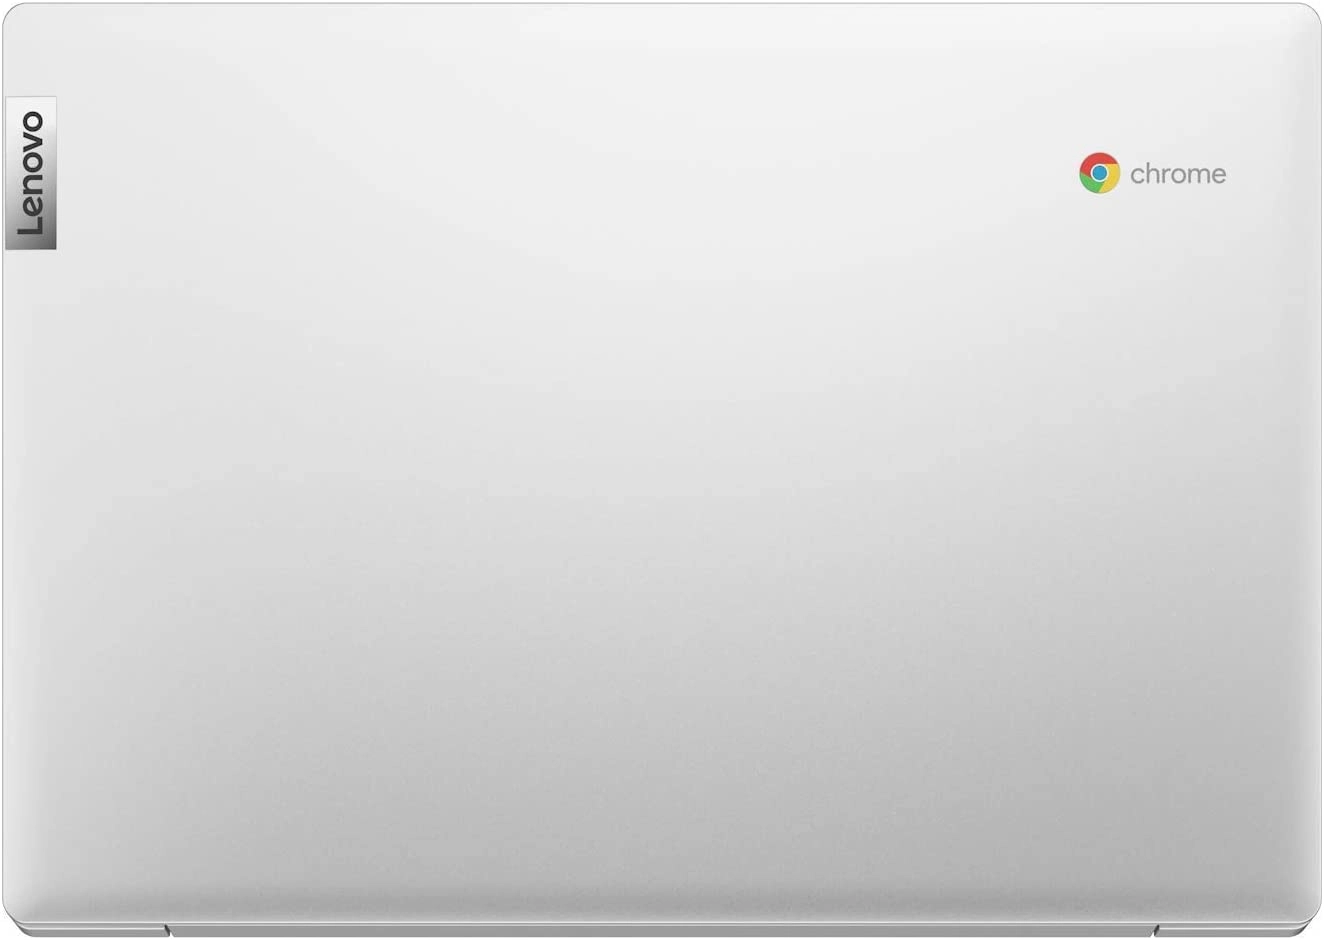 Lenovo IdeaPad 3 CB 14IGL05 laptop image